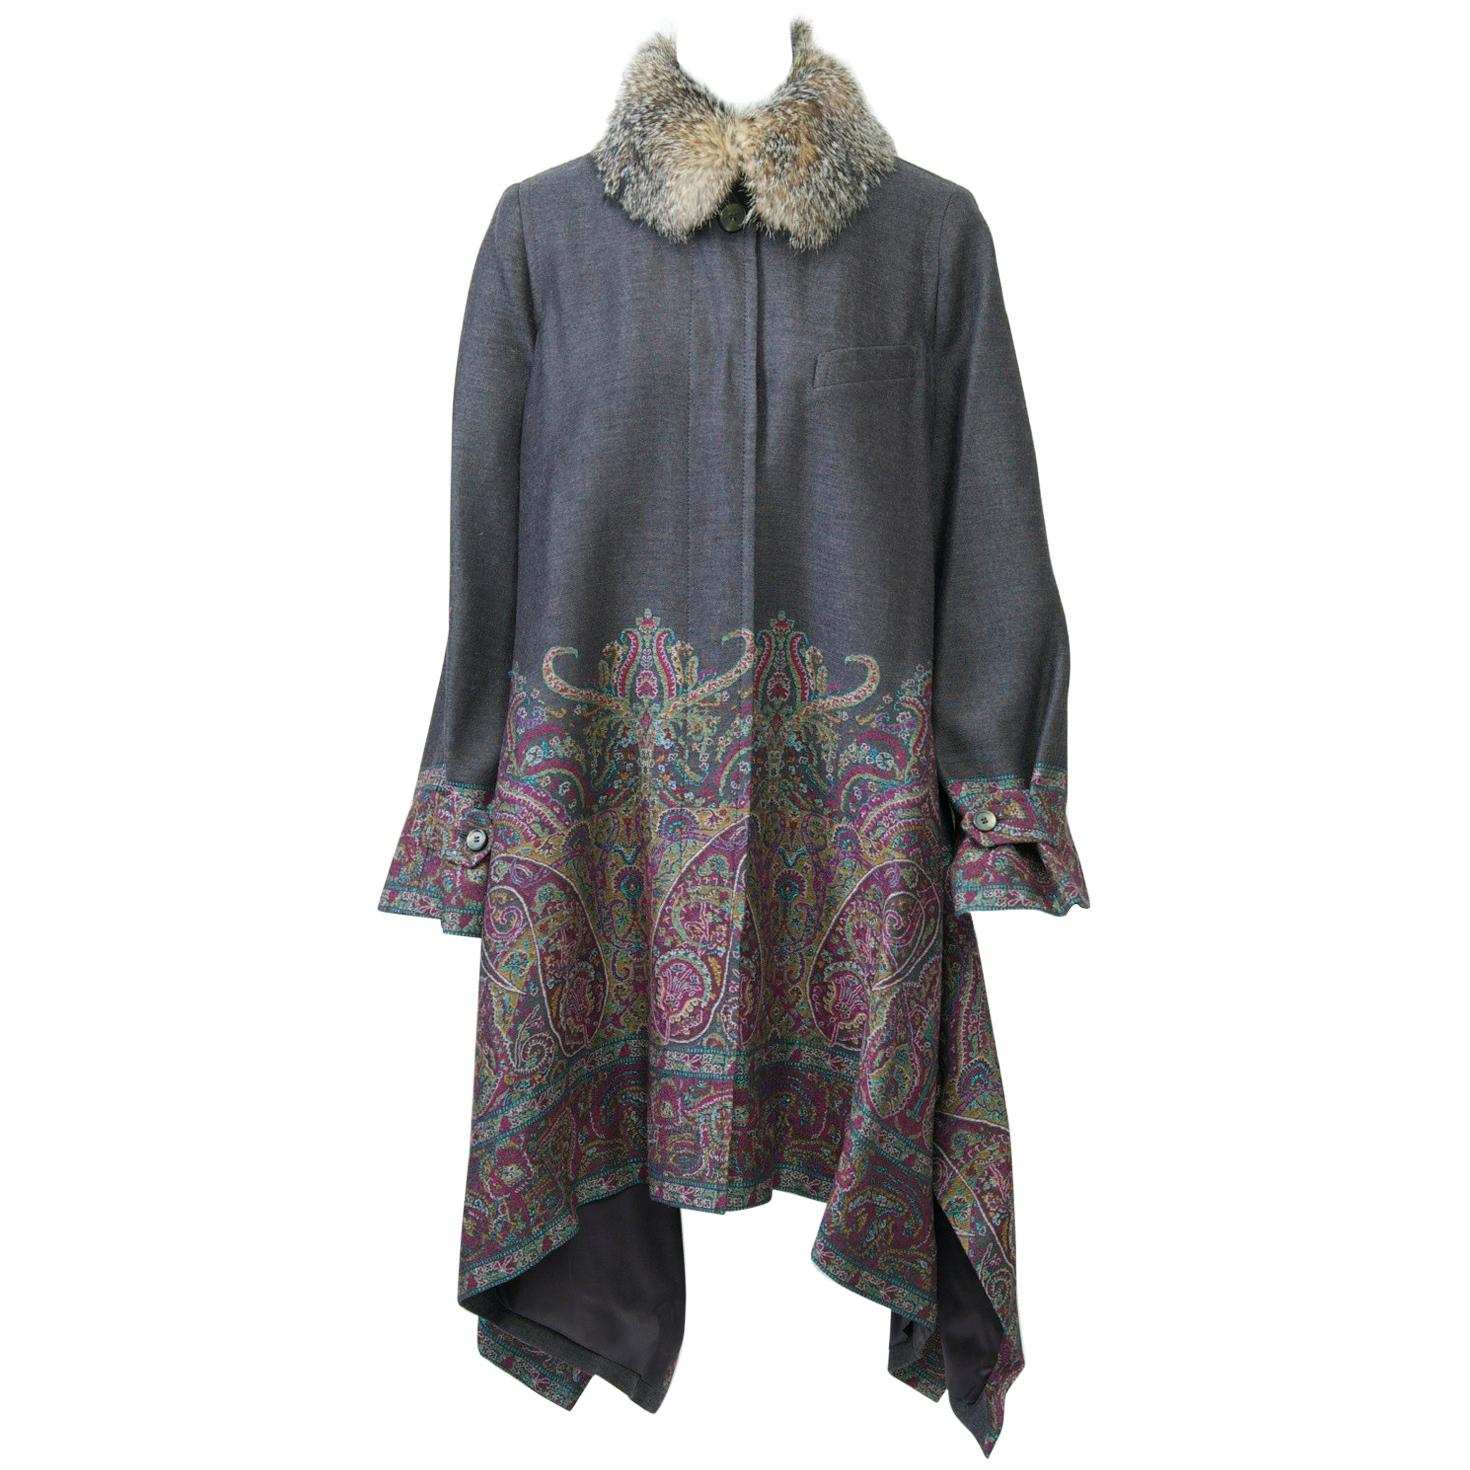 Etro Gray Wool/Paisley Coat with Handkerchief Hem